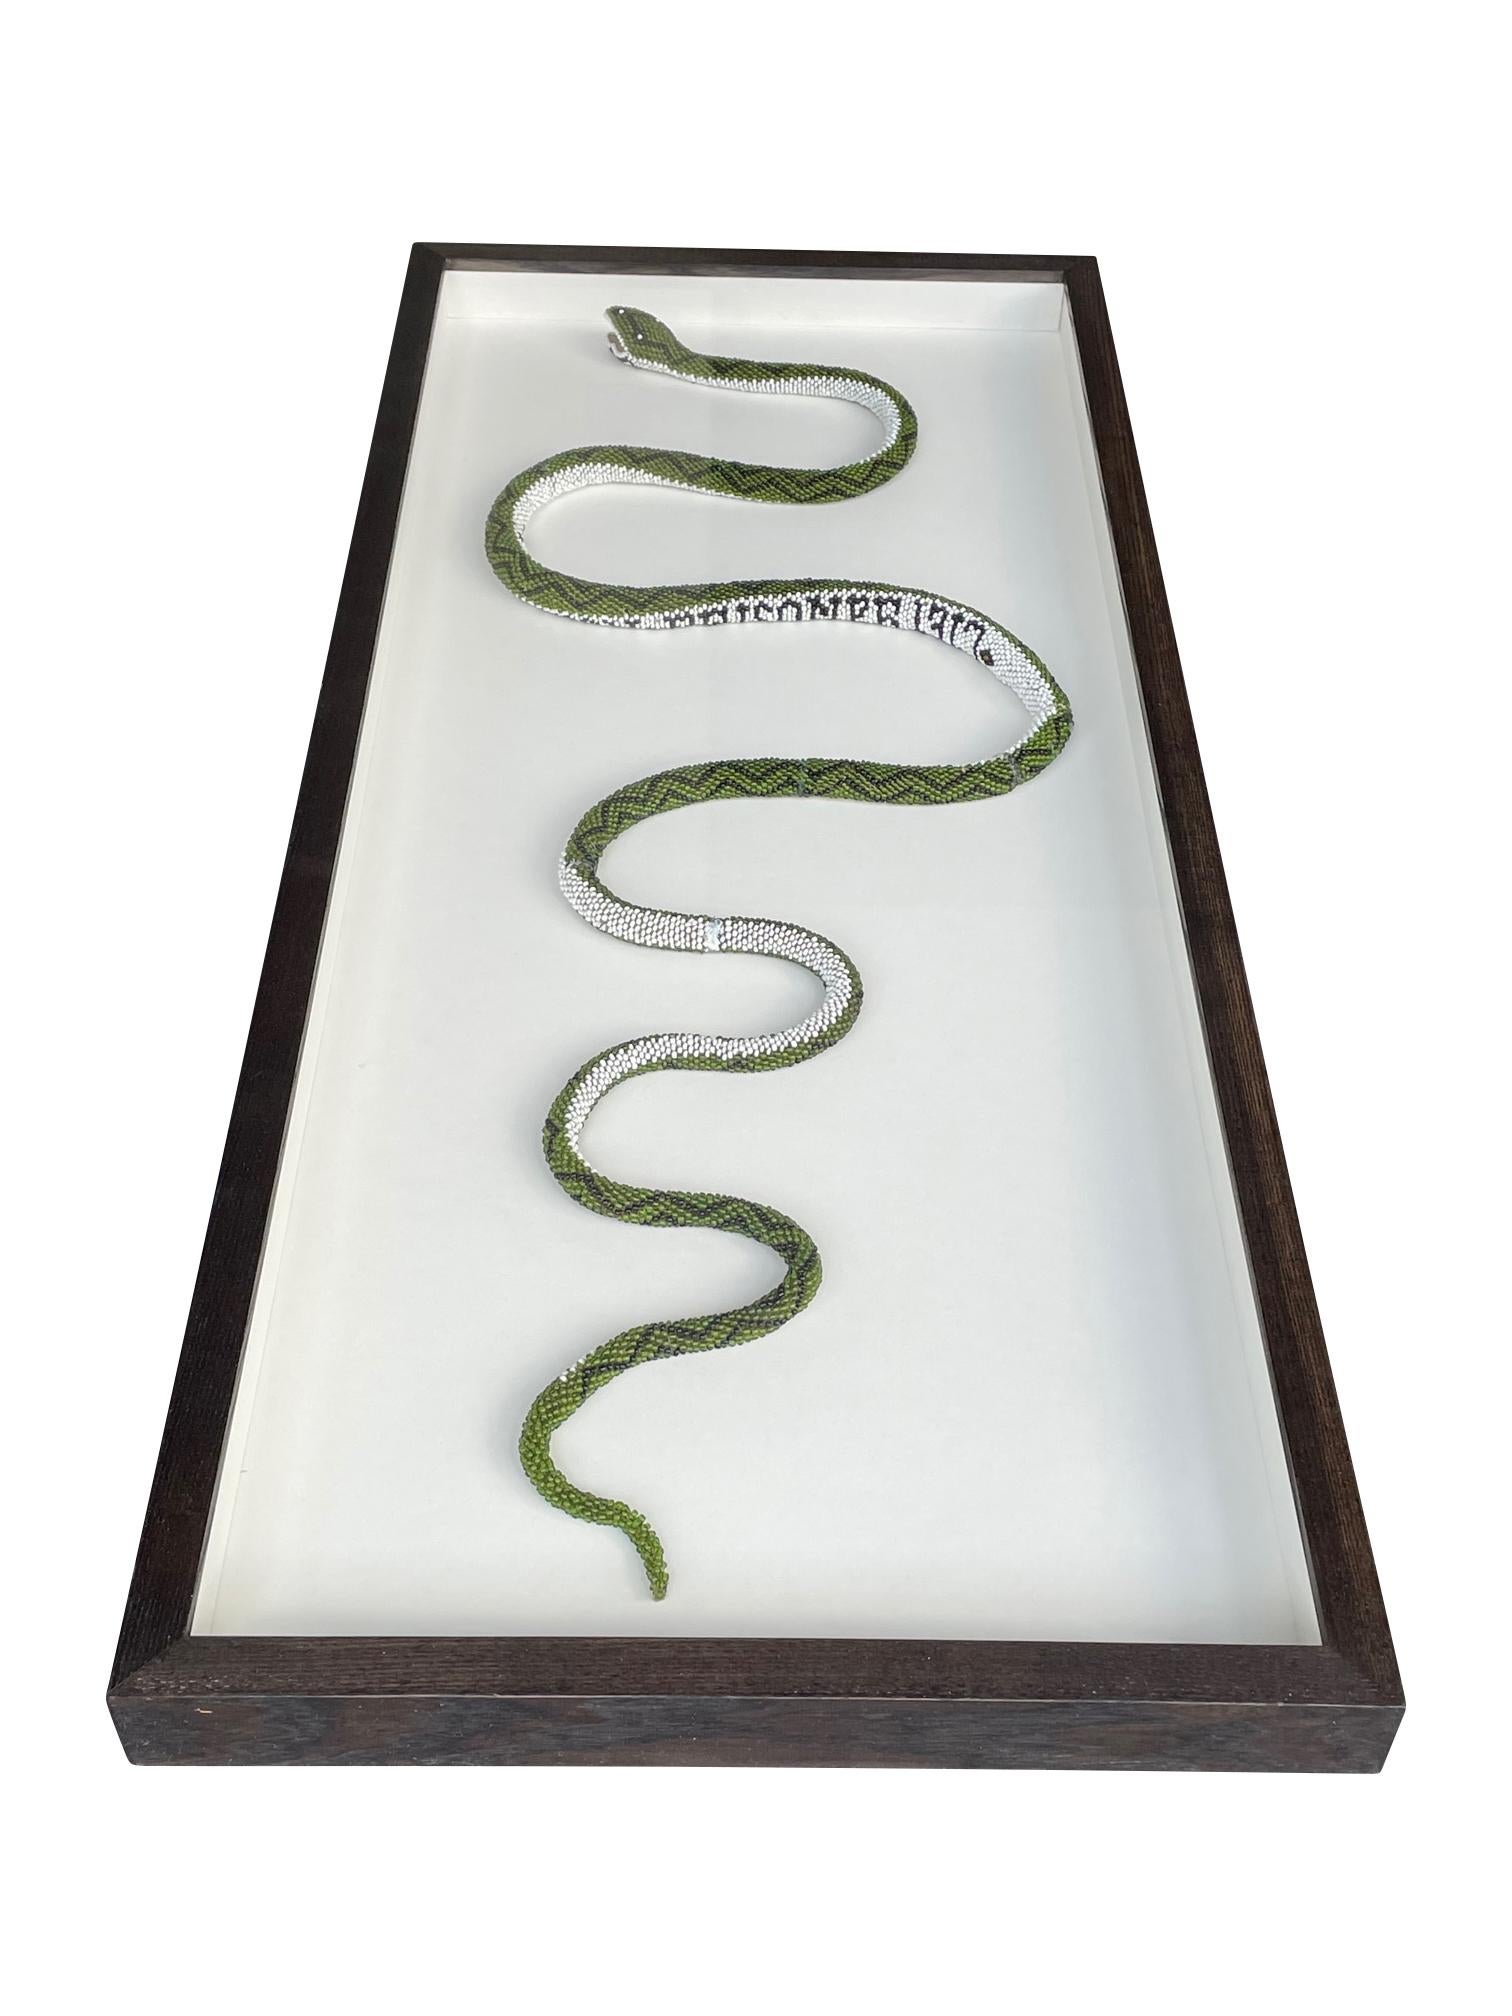 Moorish Stunning Large Framed Green Beaded Snake Made by WW1 Turkish Prisoners of War